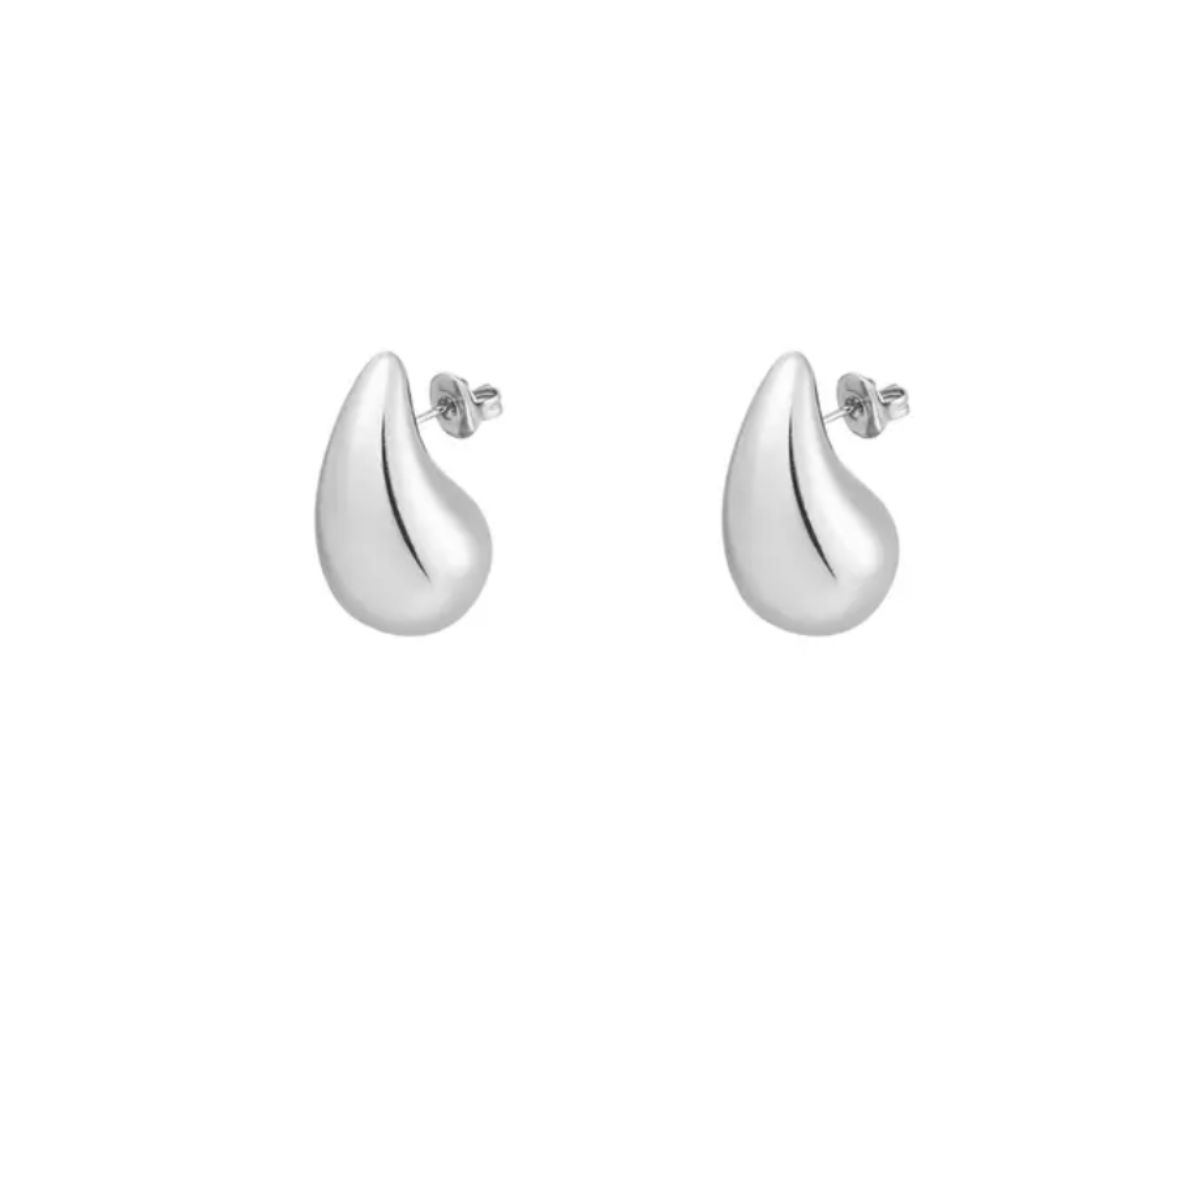 drop-stud-earrings-small-in-silver-stainless-steel